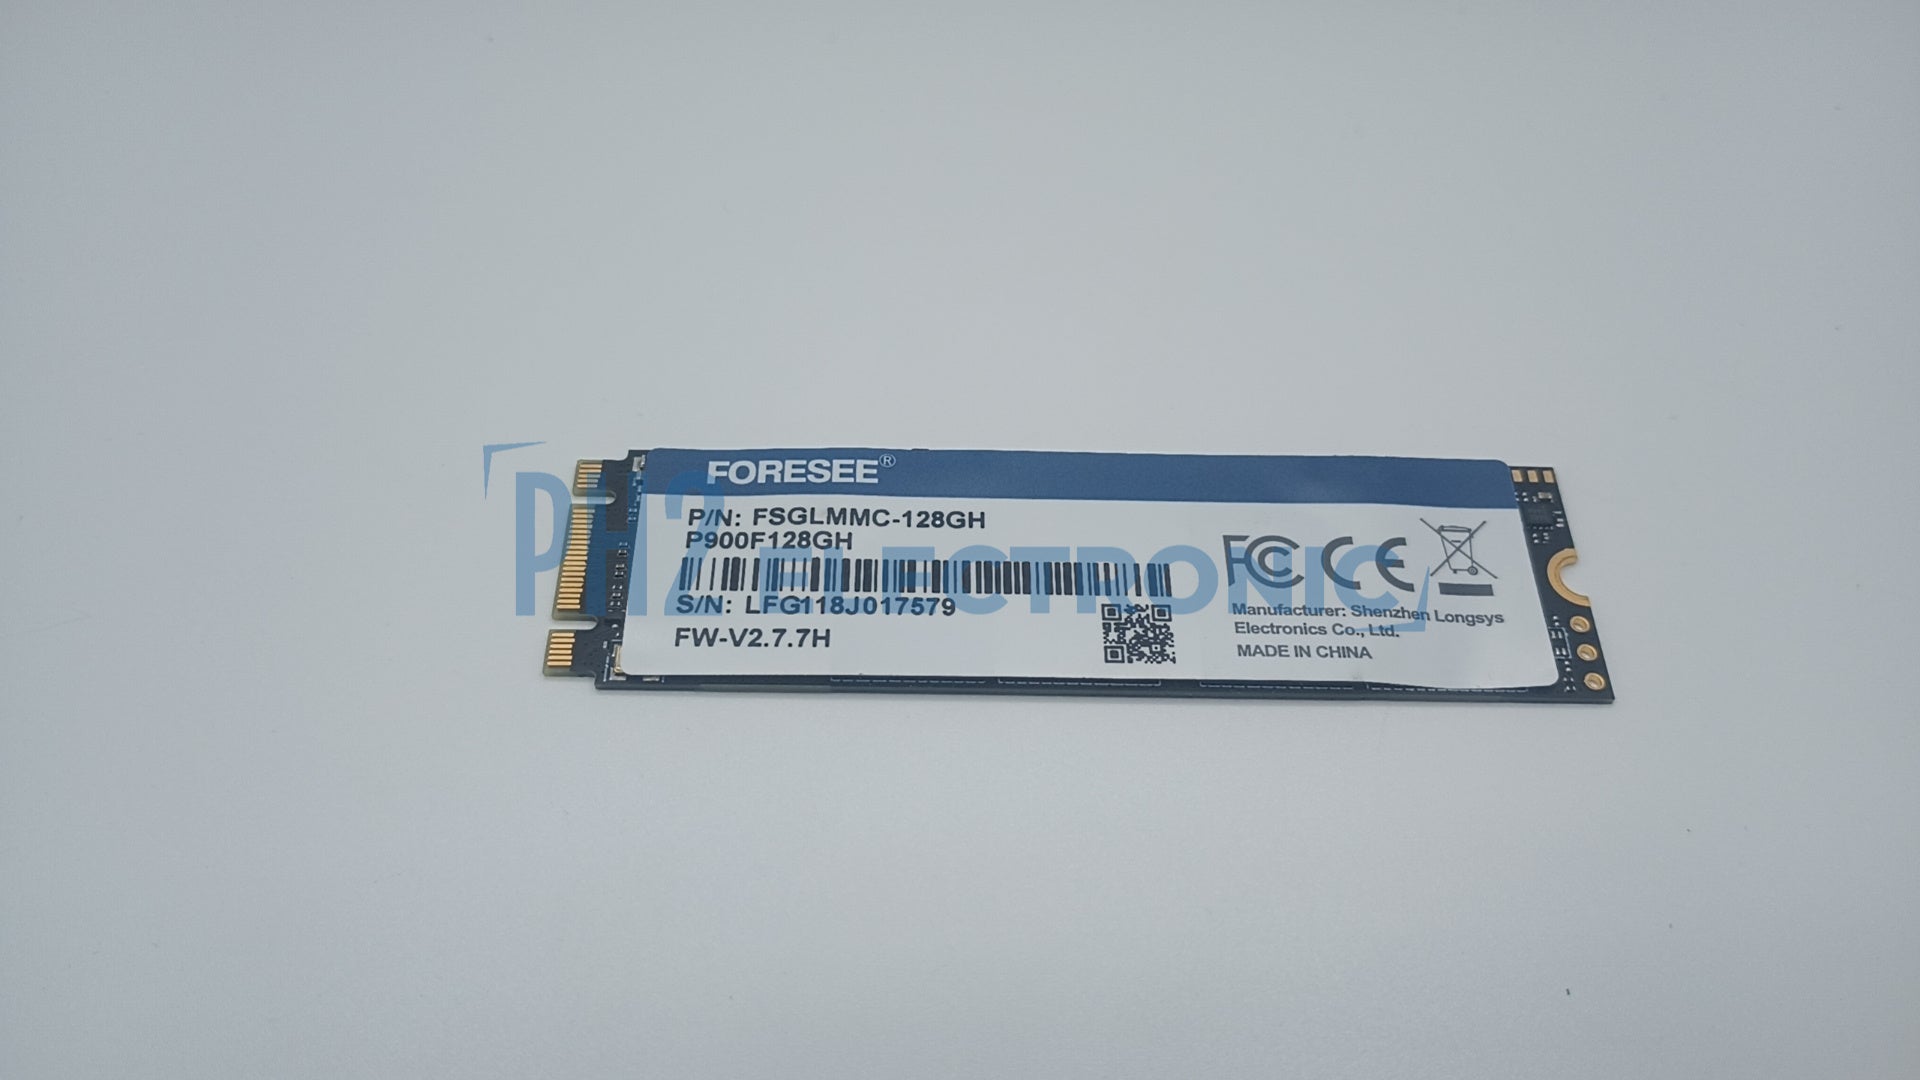 FORESEE	FSGLMMC-128GH	 	 	 128GB SATA III SSD Solid State Drive M.2 2280